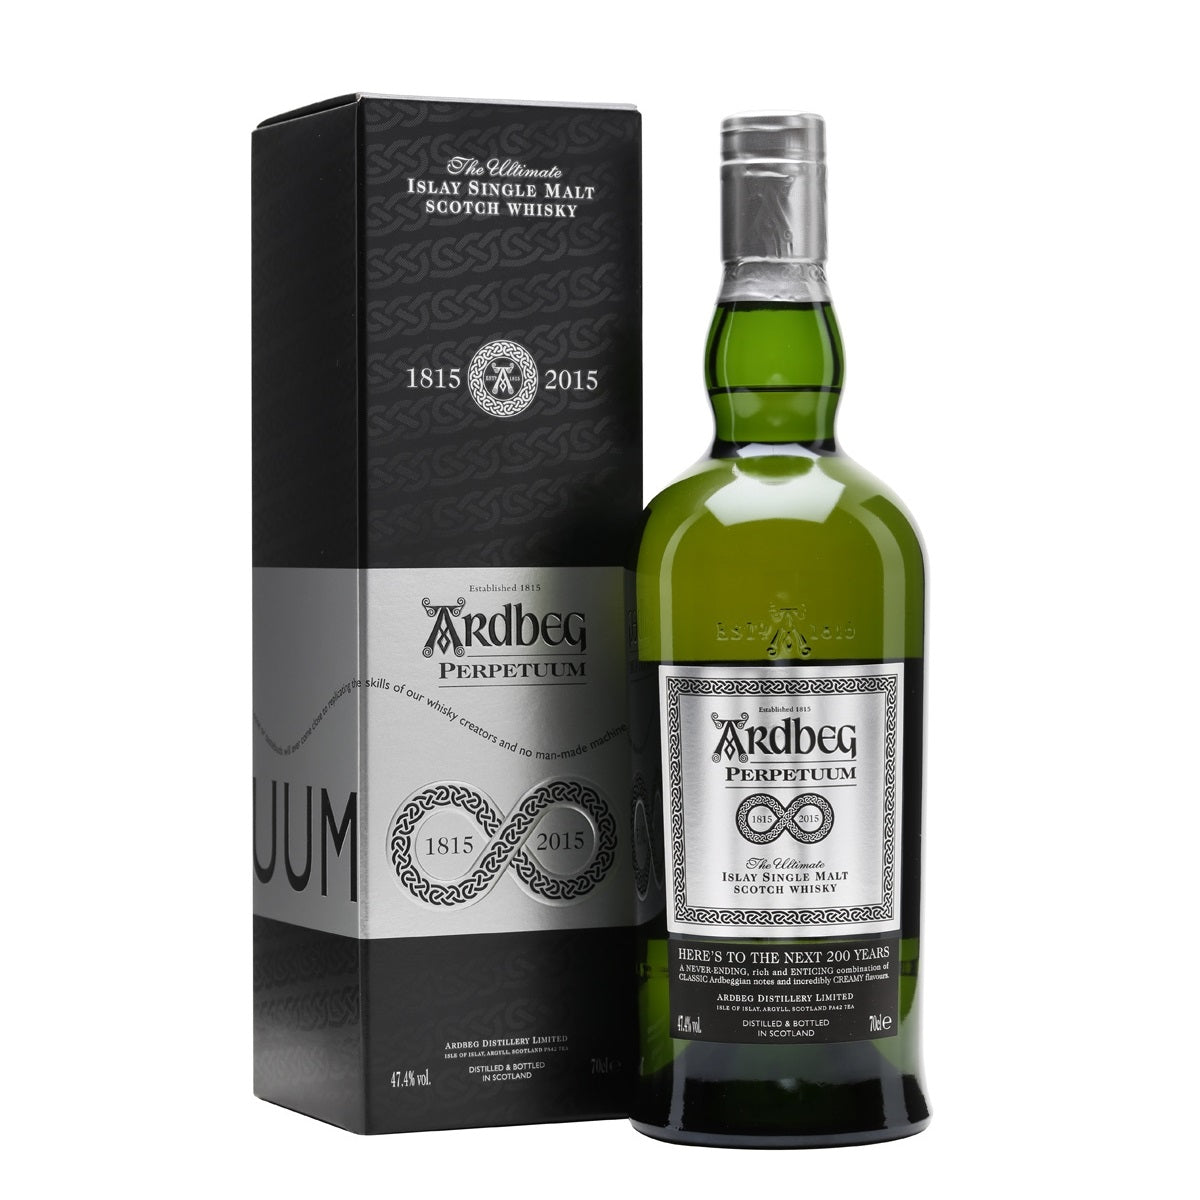 Ardbeg Perpetuum Ardbeg Day 2015 Scotch Whisky ABV 47.4% 70cl With